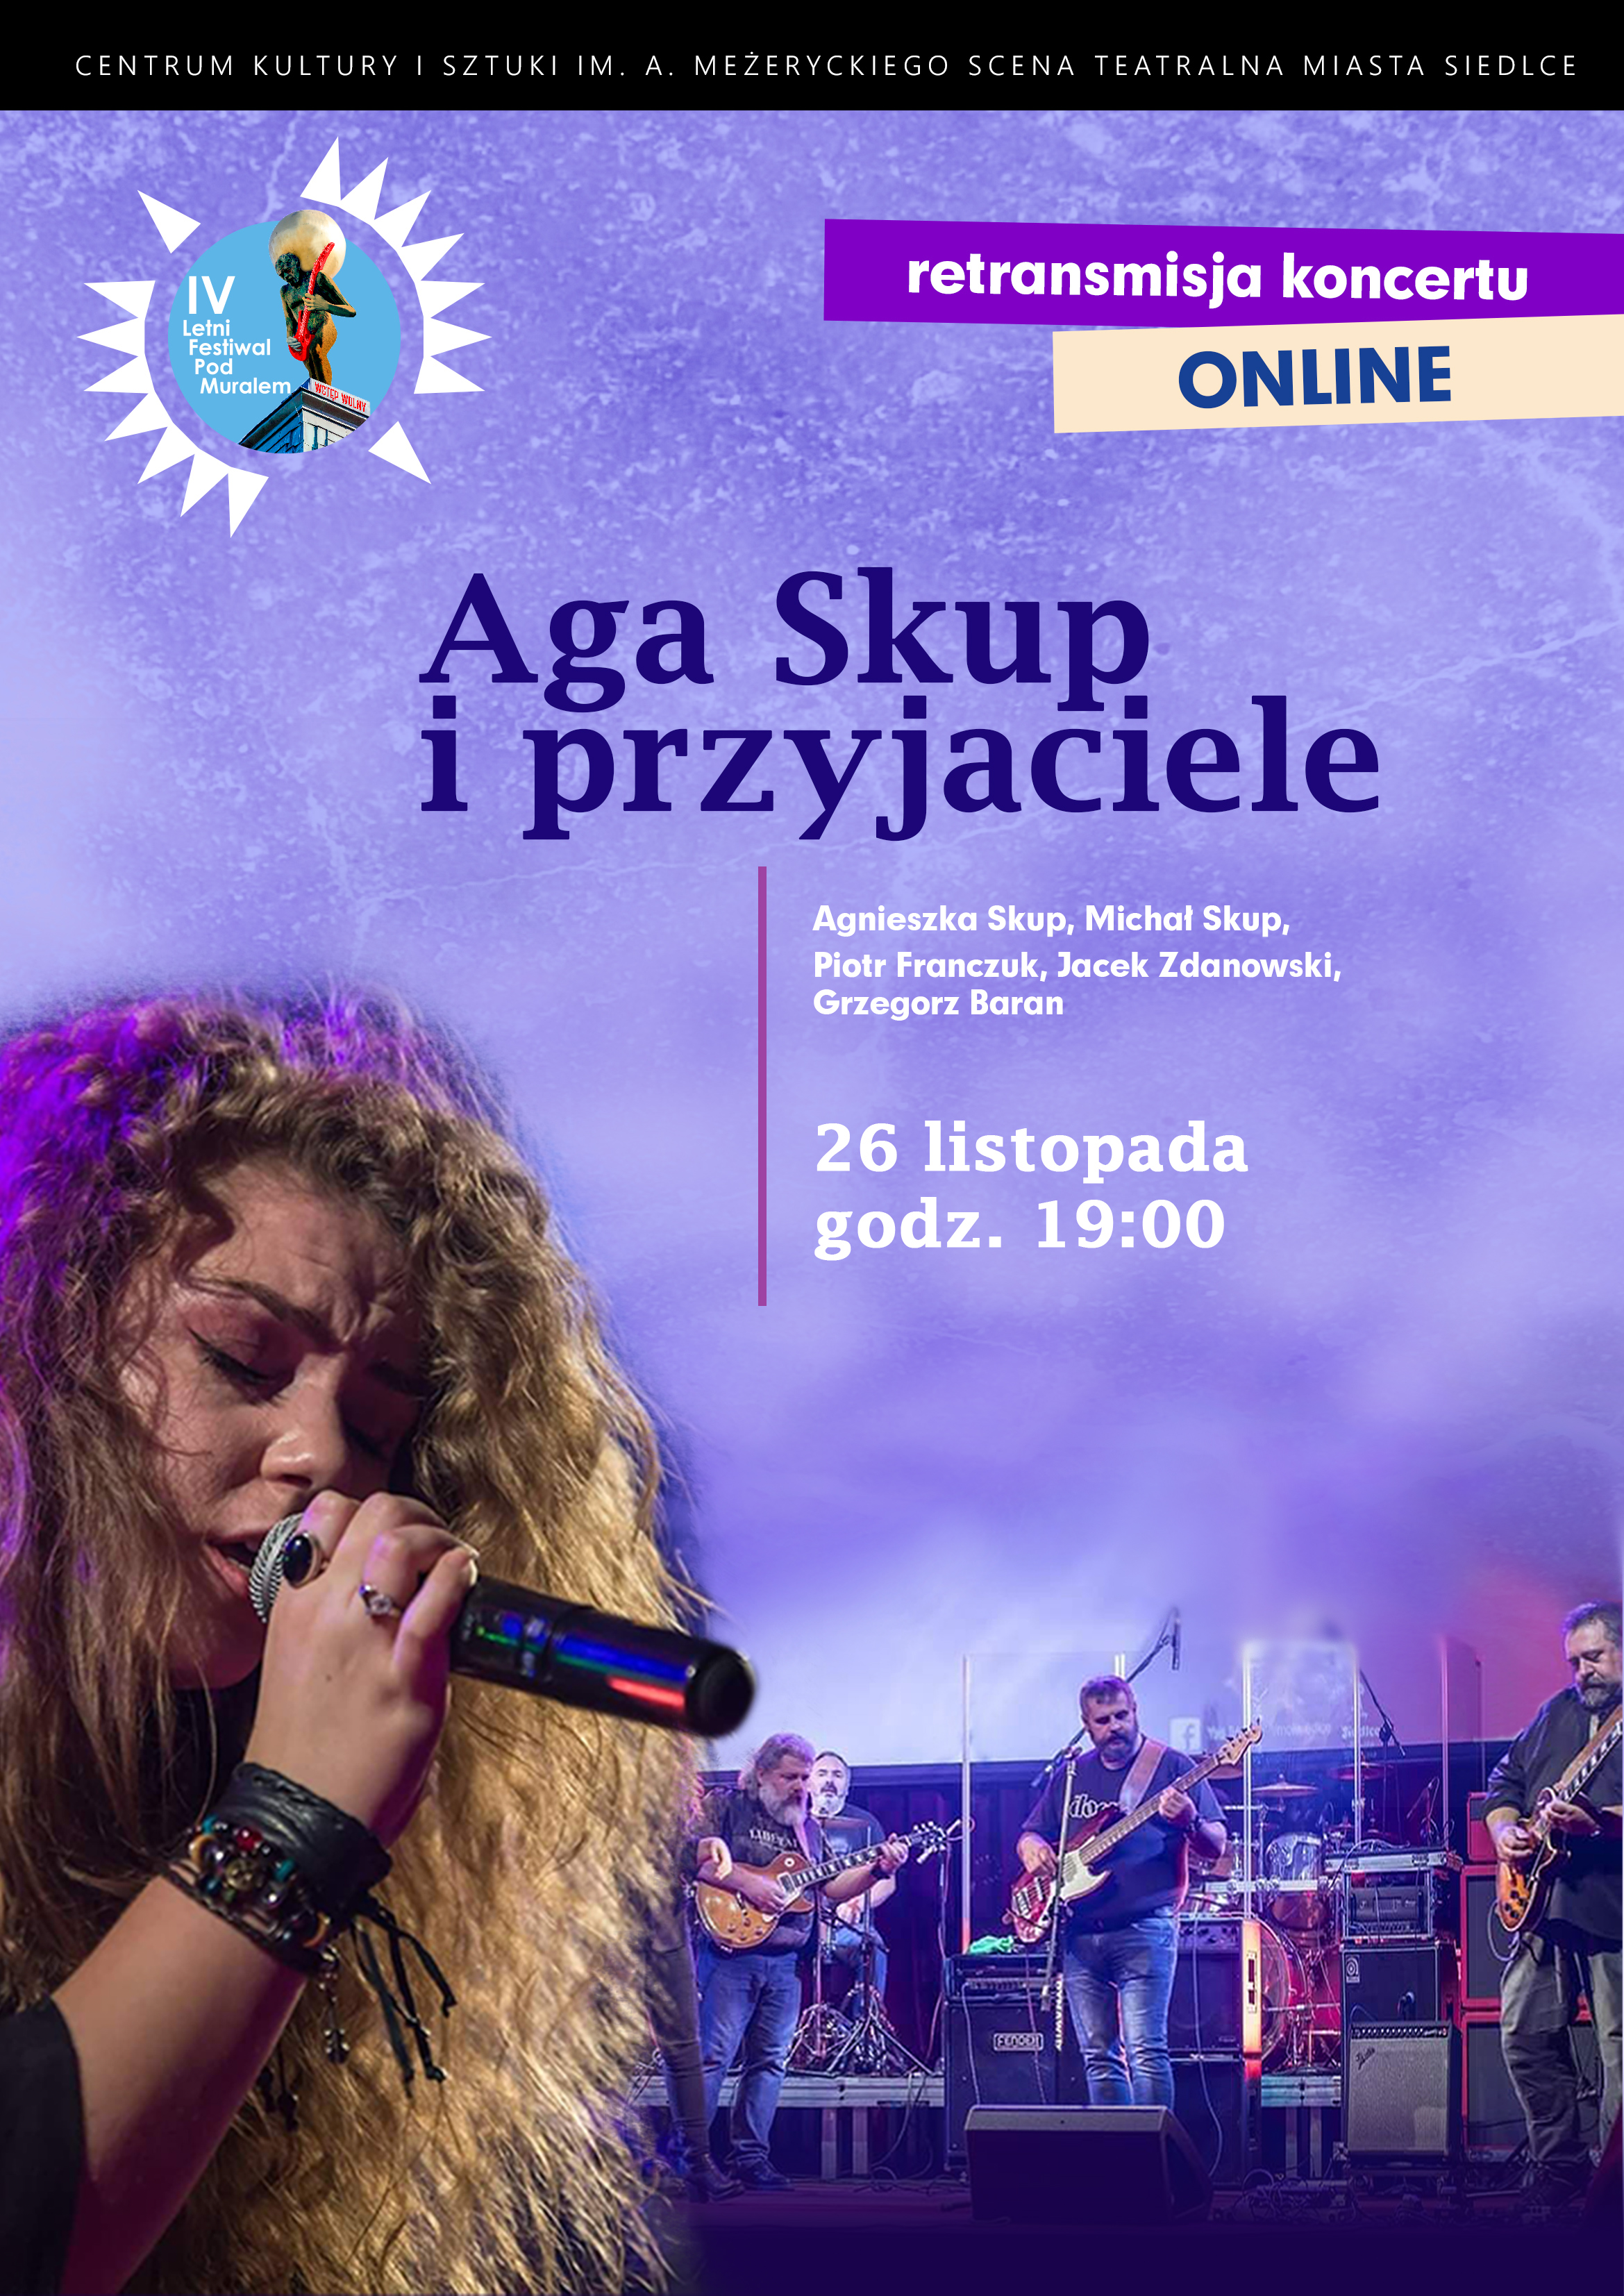 Aga Skup i Przyjaciele - retransmisja koncertu online